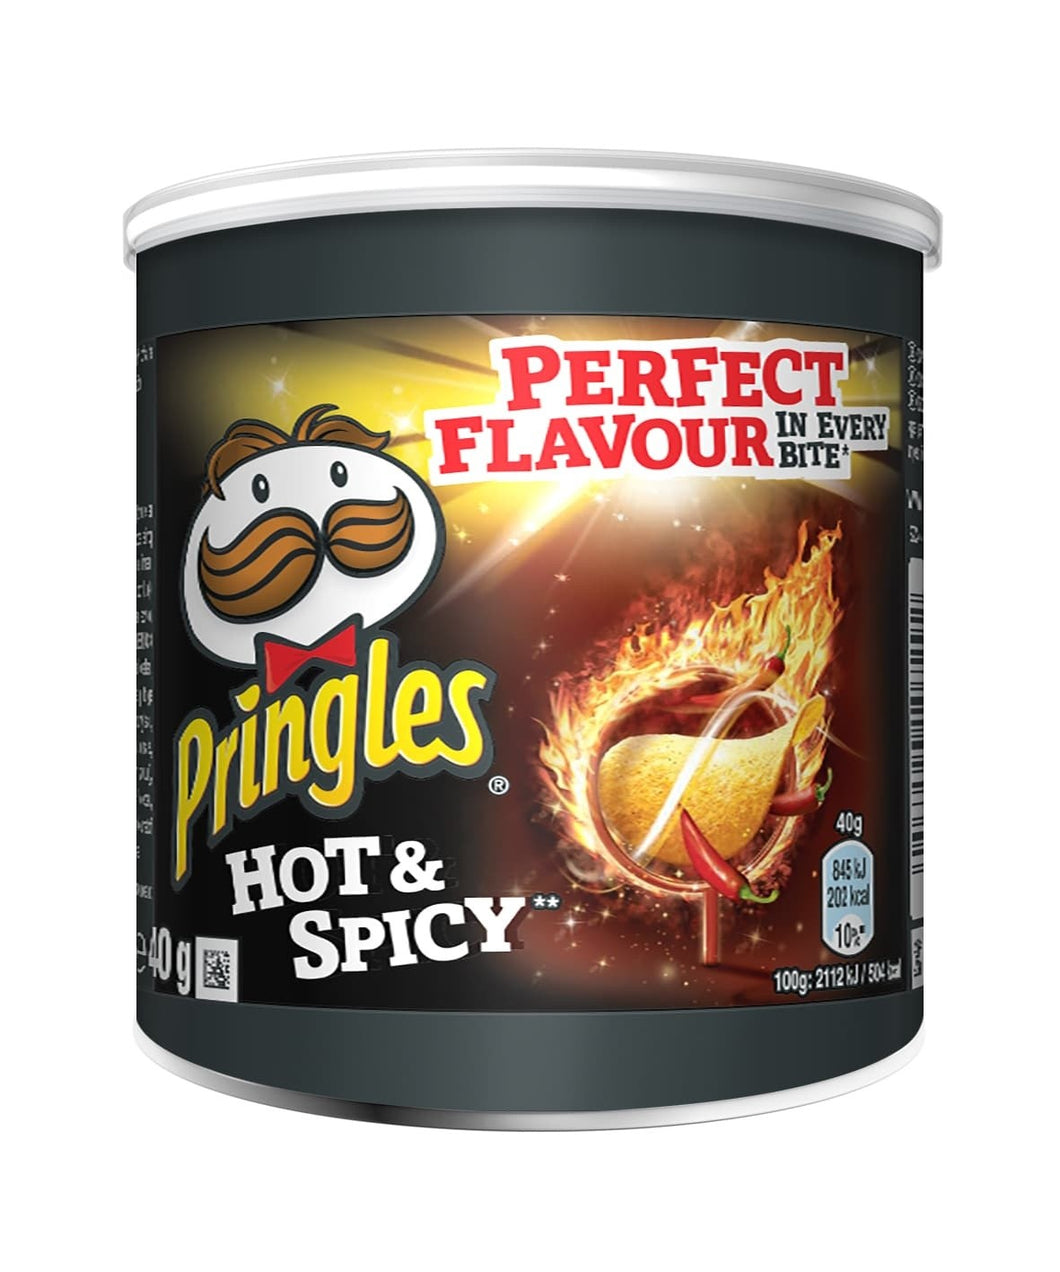 Pringles 40gr hot & spicy - 12 pcs